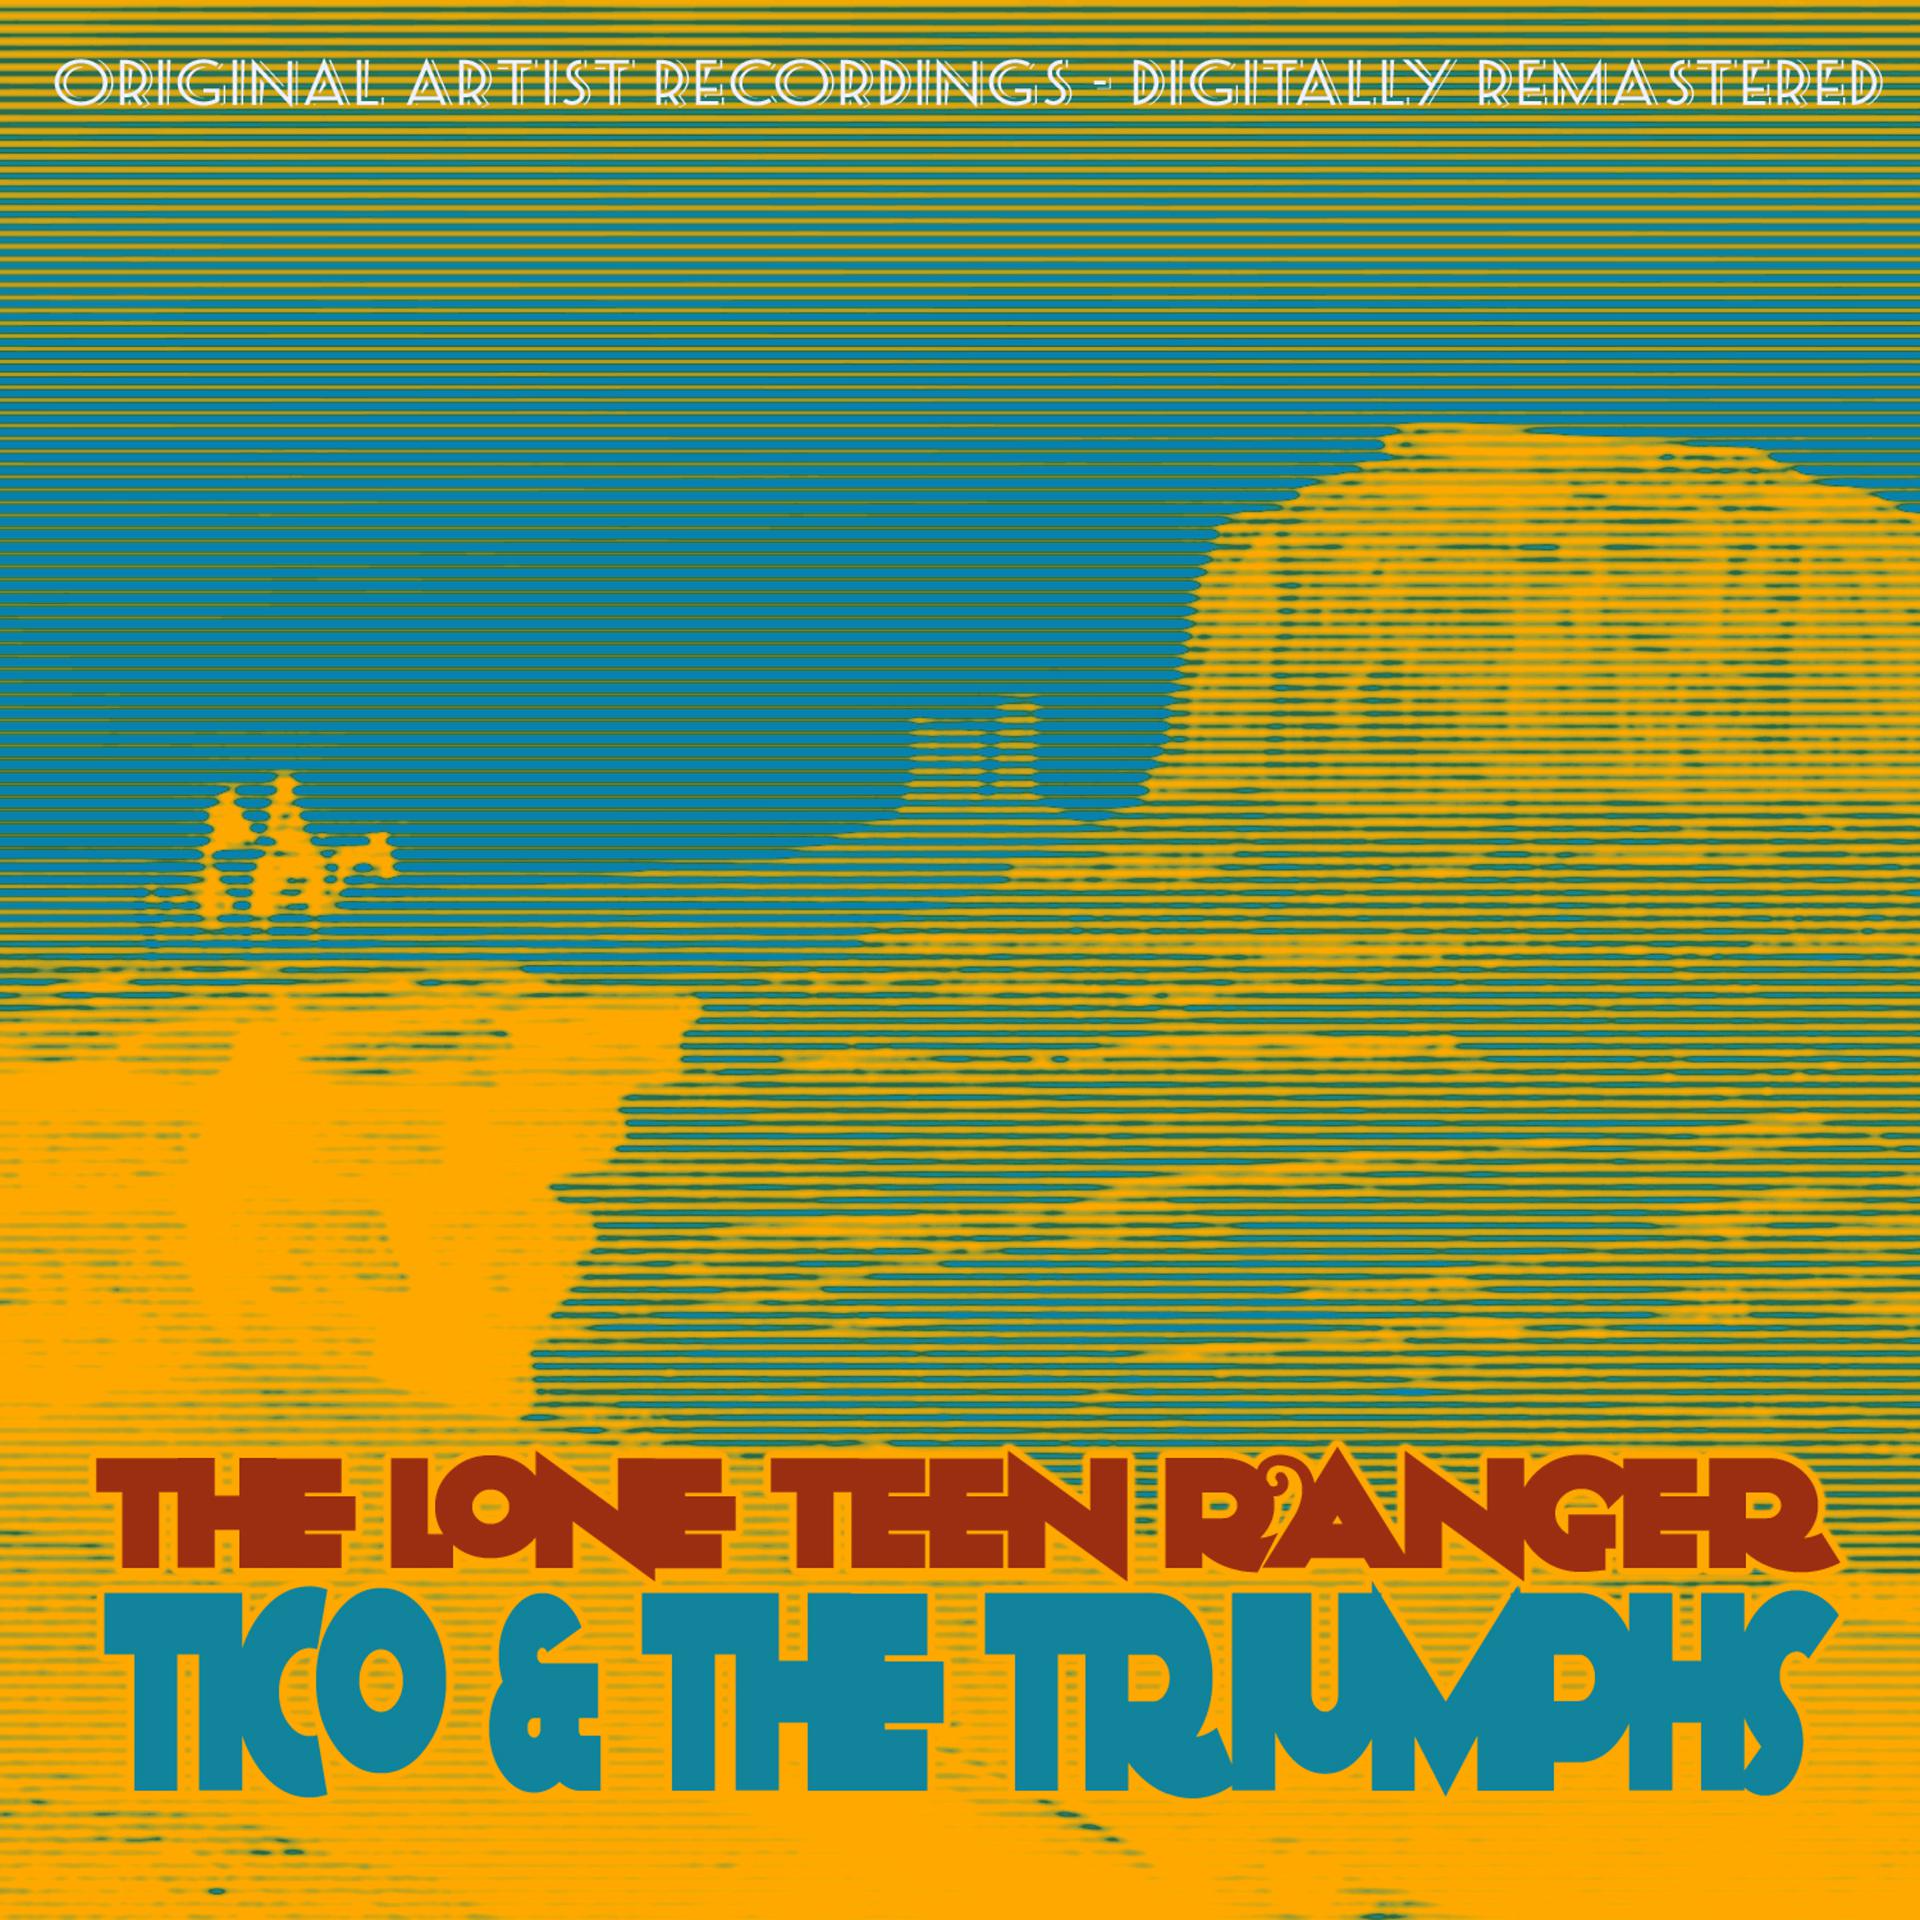 Постер альбома The Lone Teen Ranger